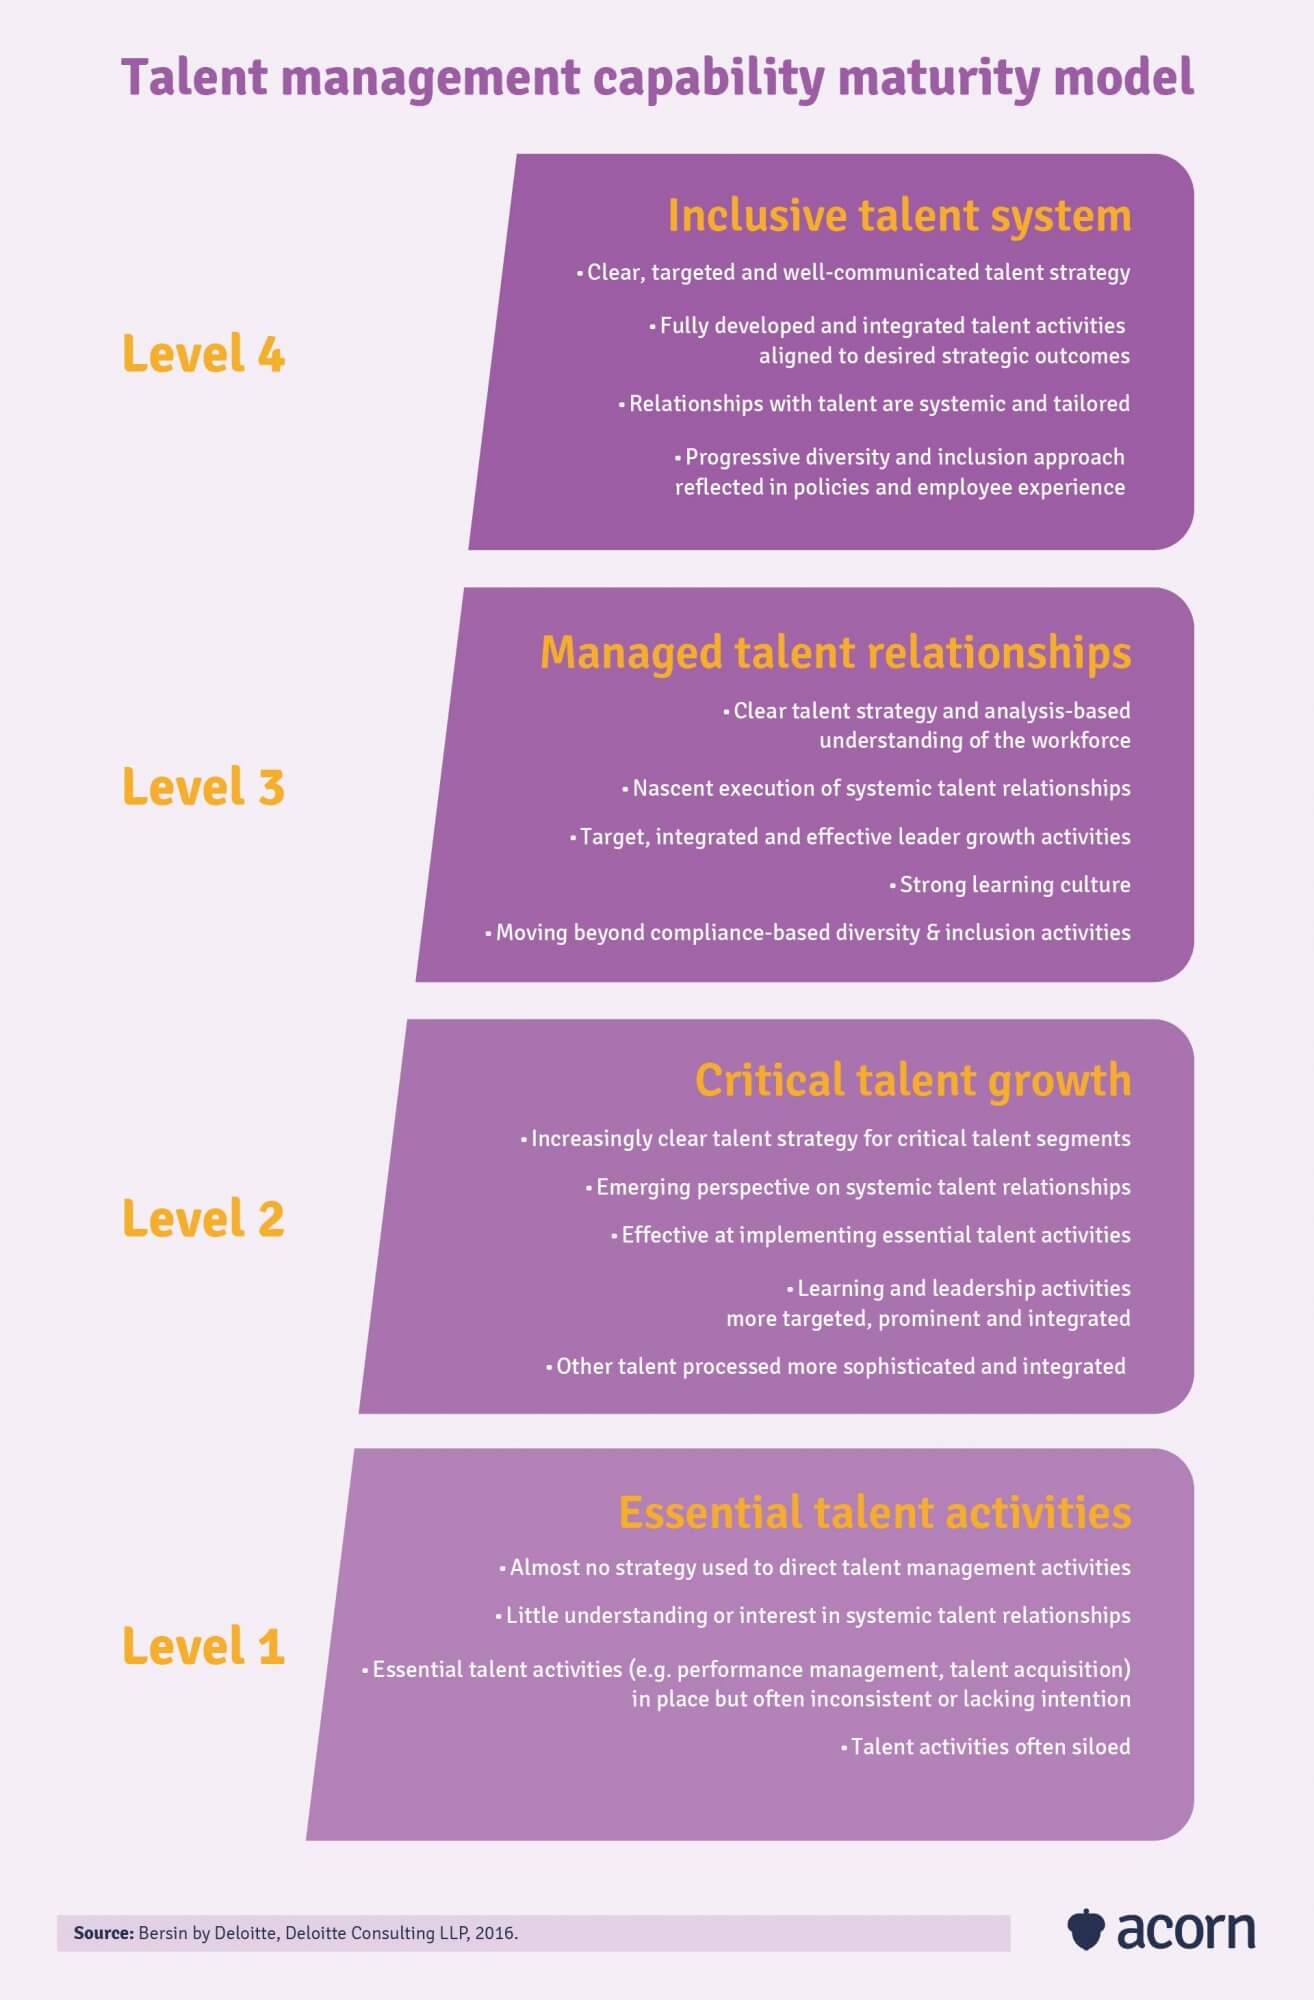 bersin's talent management capability maturity model